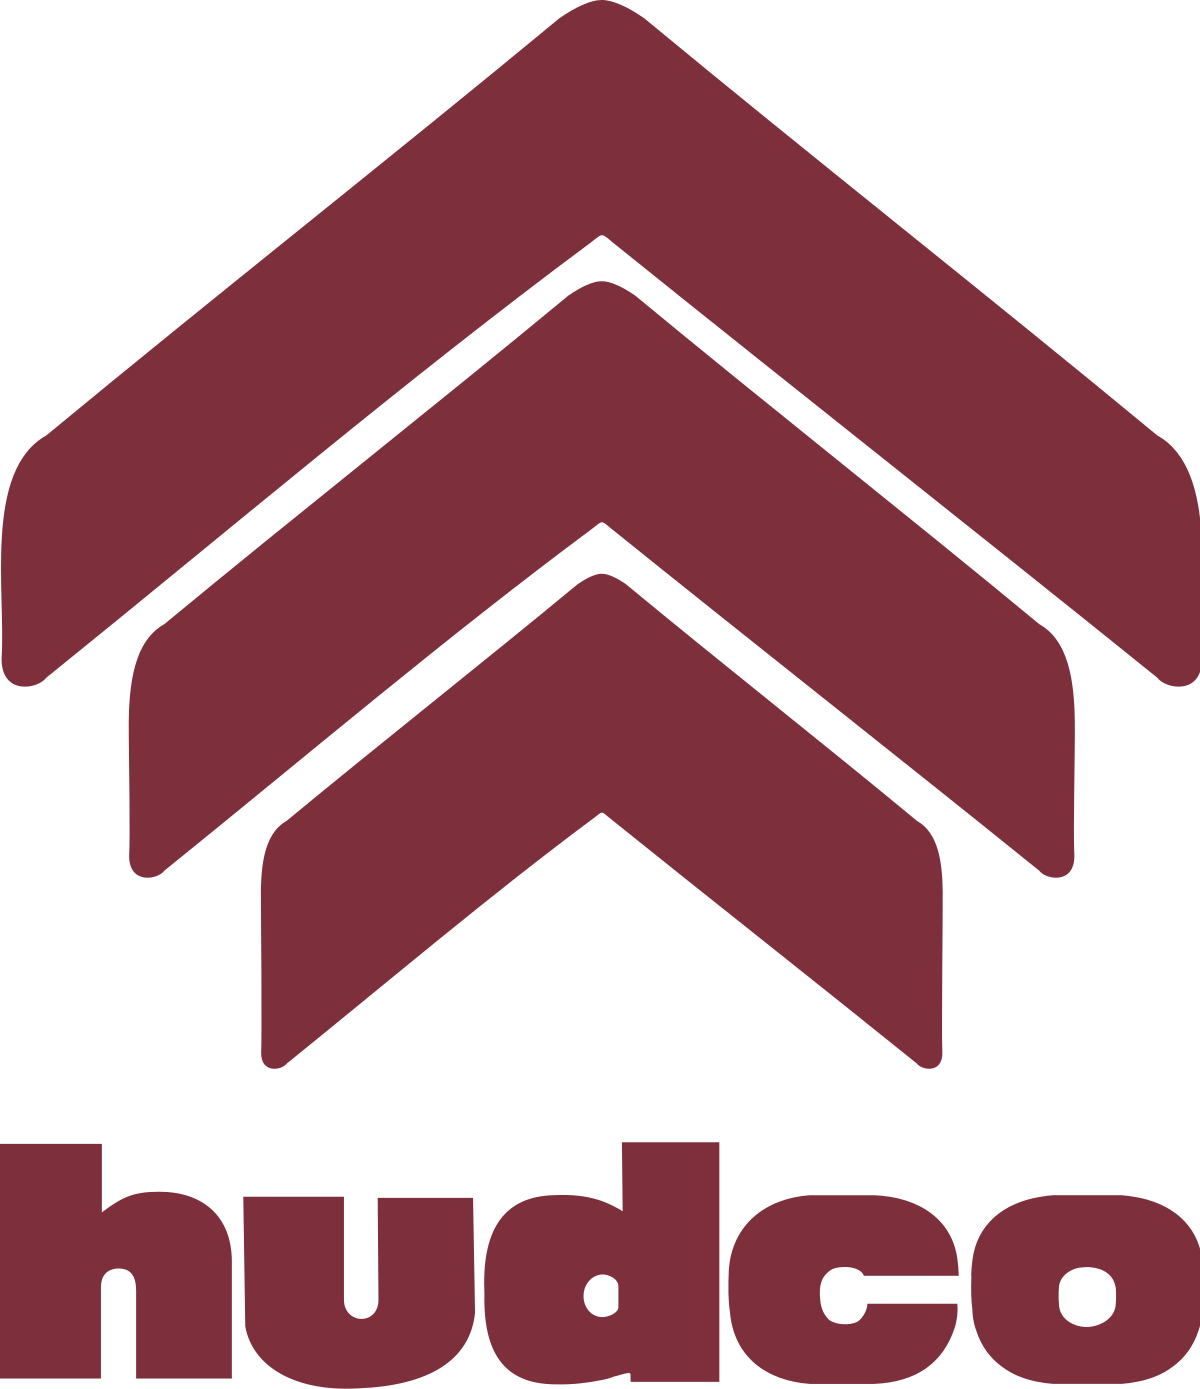 Housing And Urban Development Corp Ltd Share ki Kimat (Price) - Today you can invest money in government company Hudco?, HUDCO कंपनी के एक शेयर की कीमत क्या है ?